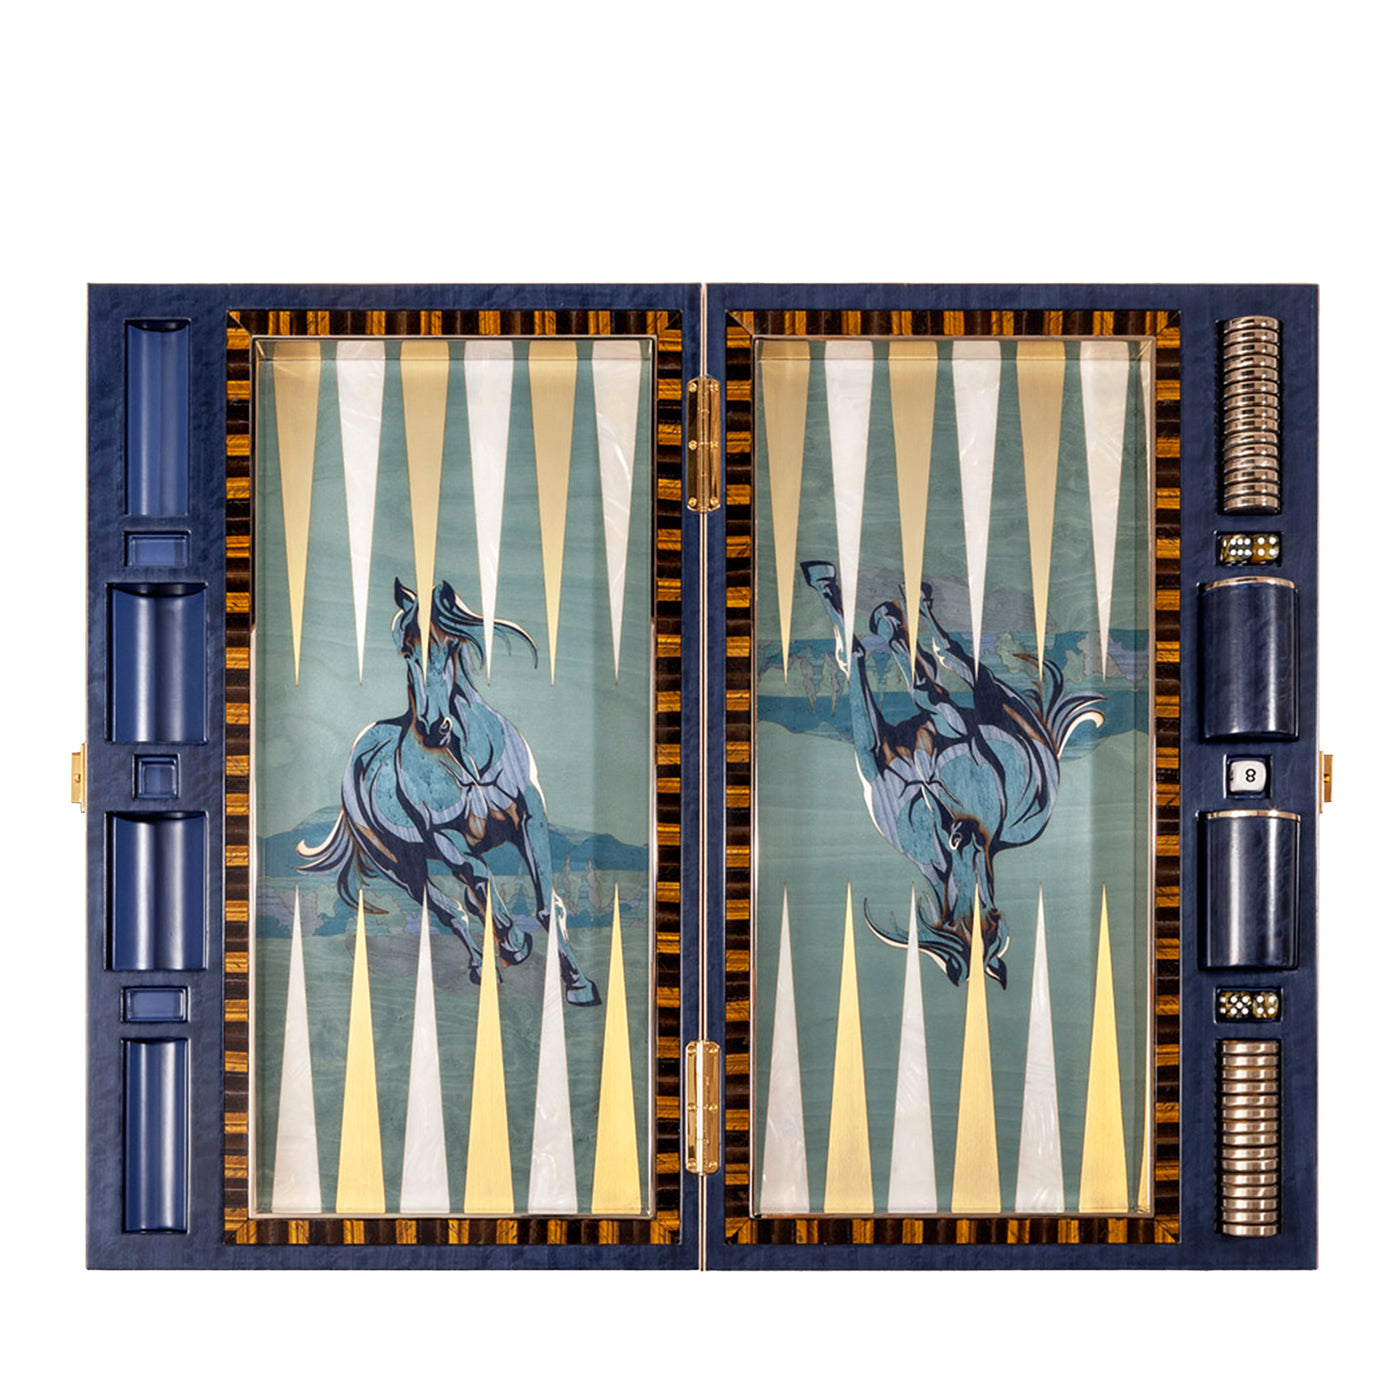 Artistic Inlaid Polychrome Backgammon Set by Fabio Calagna - Main view